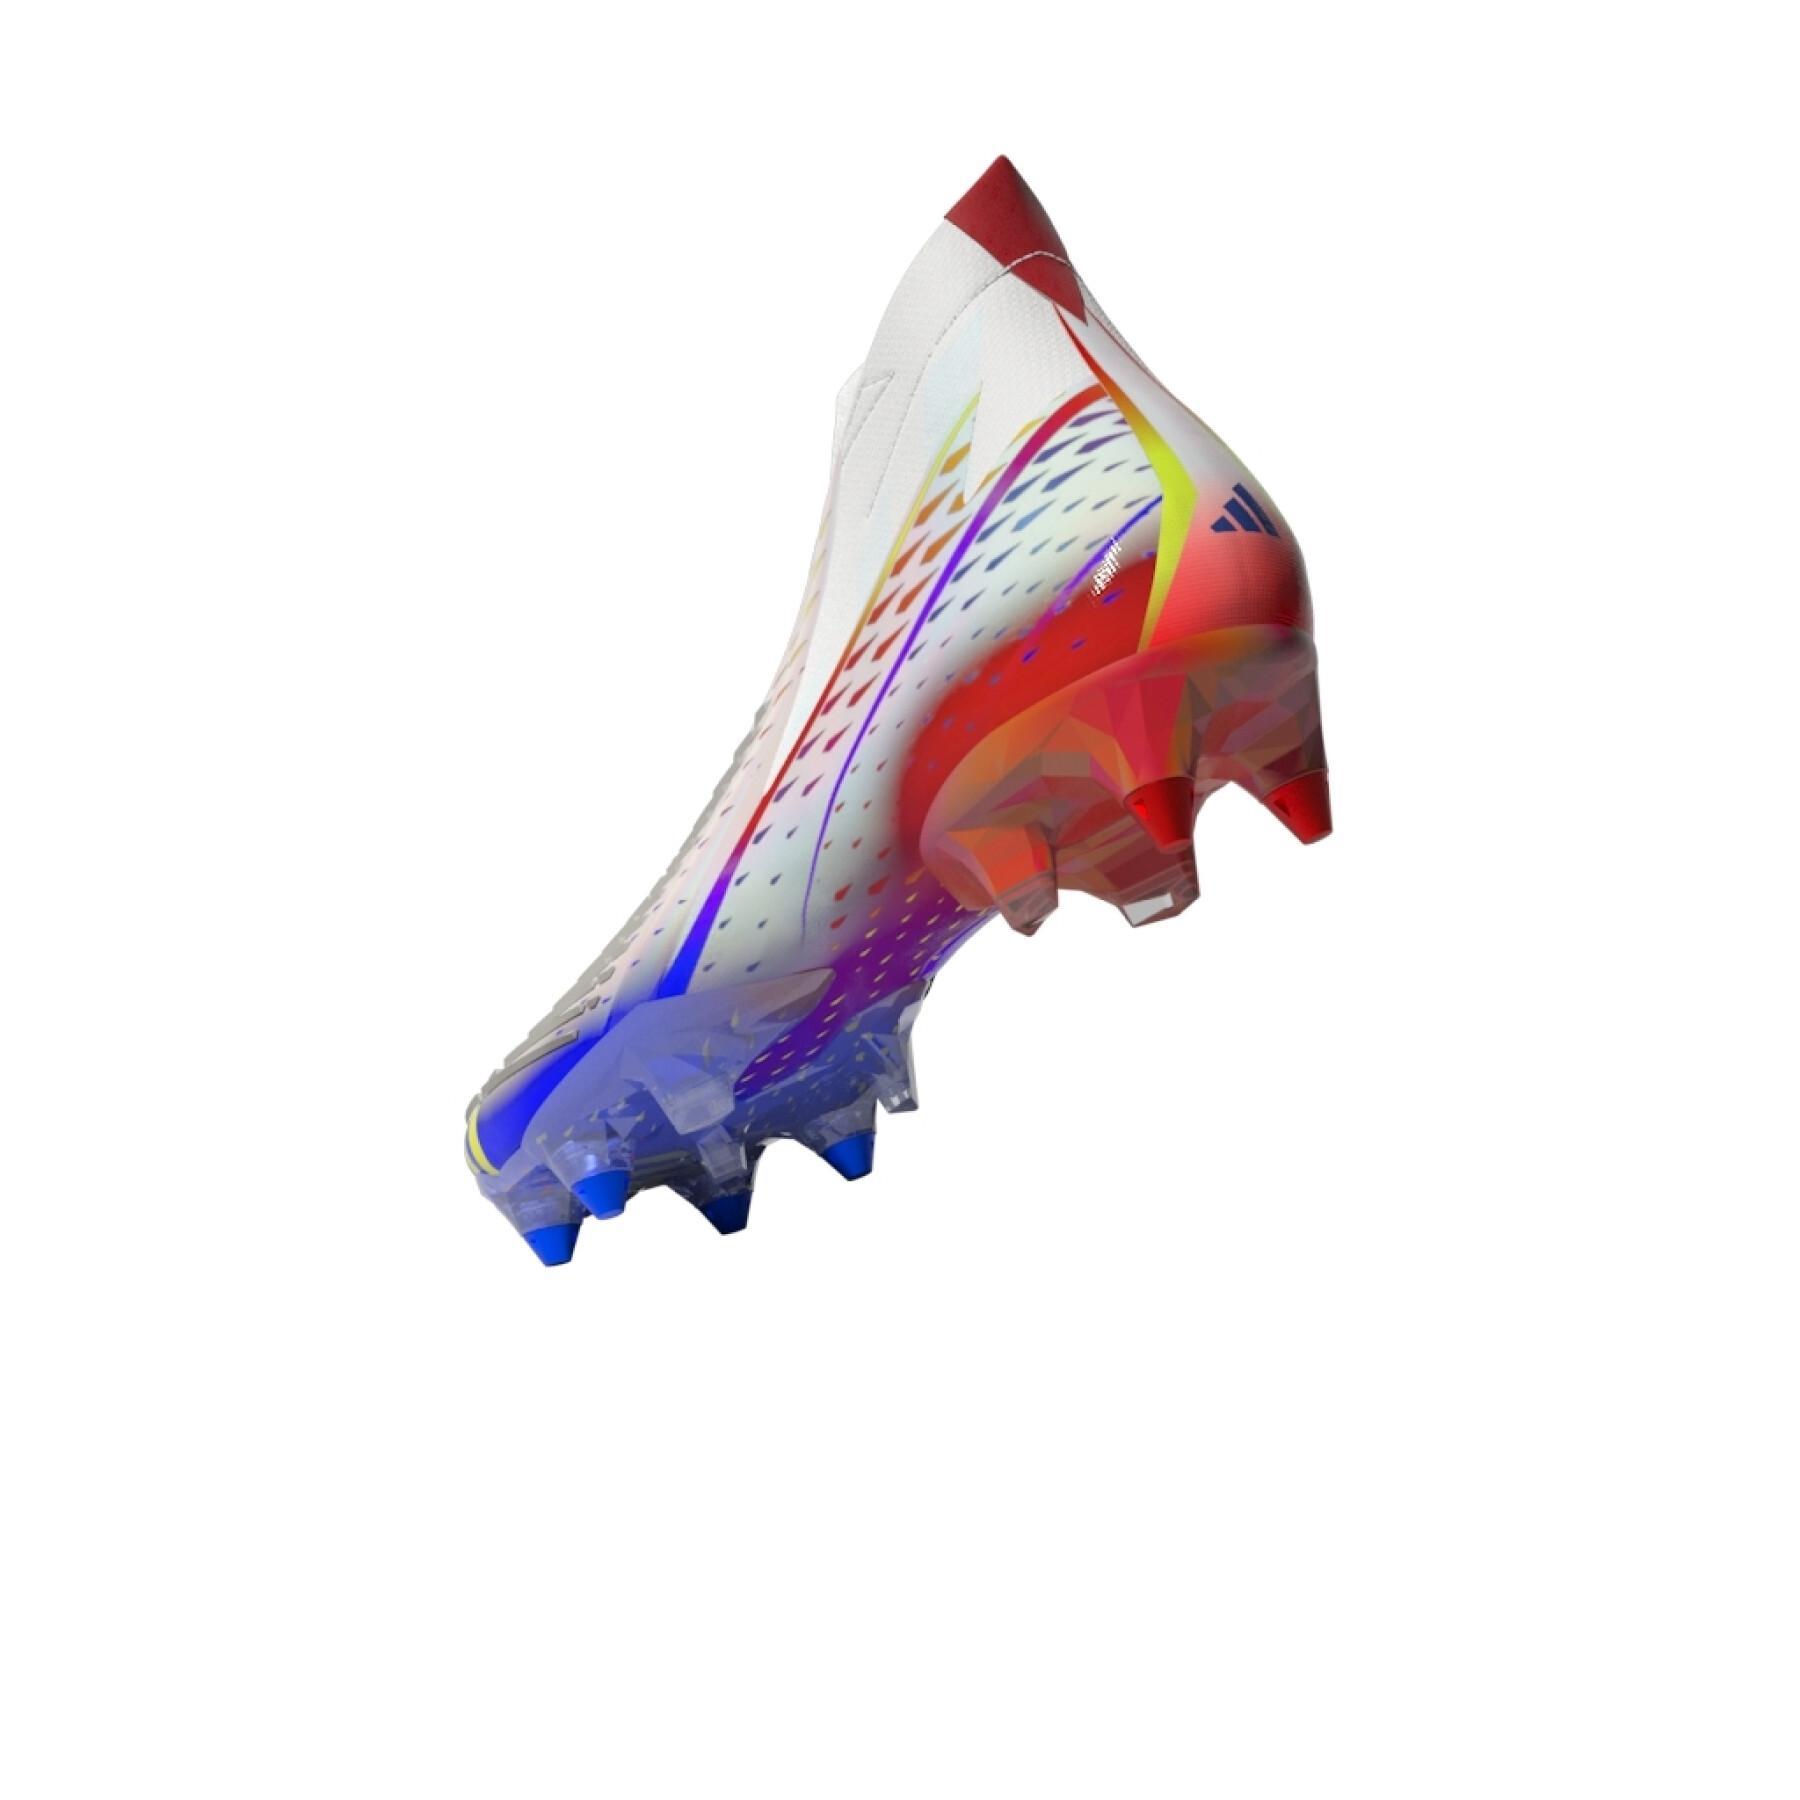 Soccer shoes adidas Predator Edge+ SG - Al Rihla